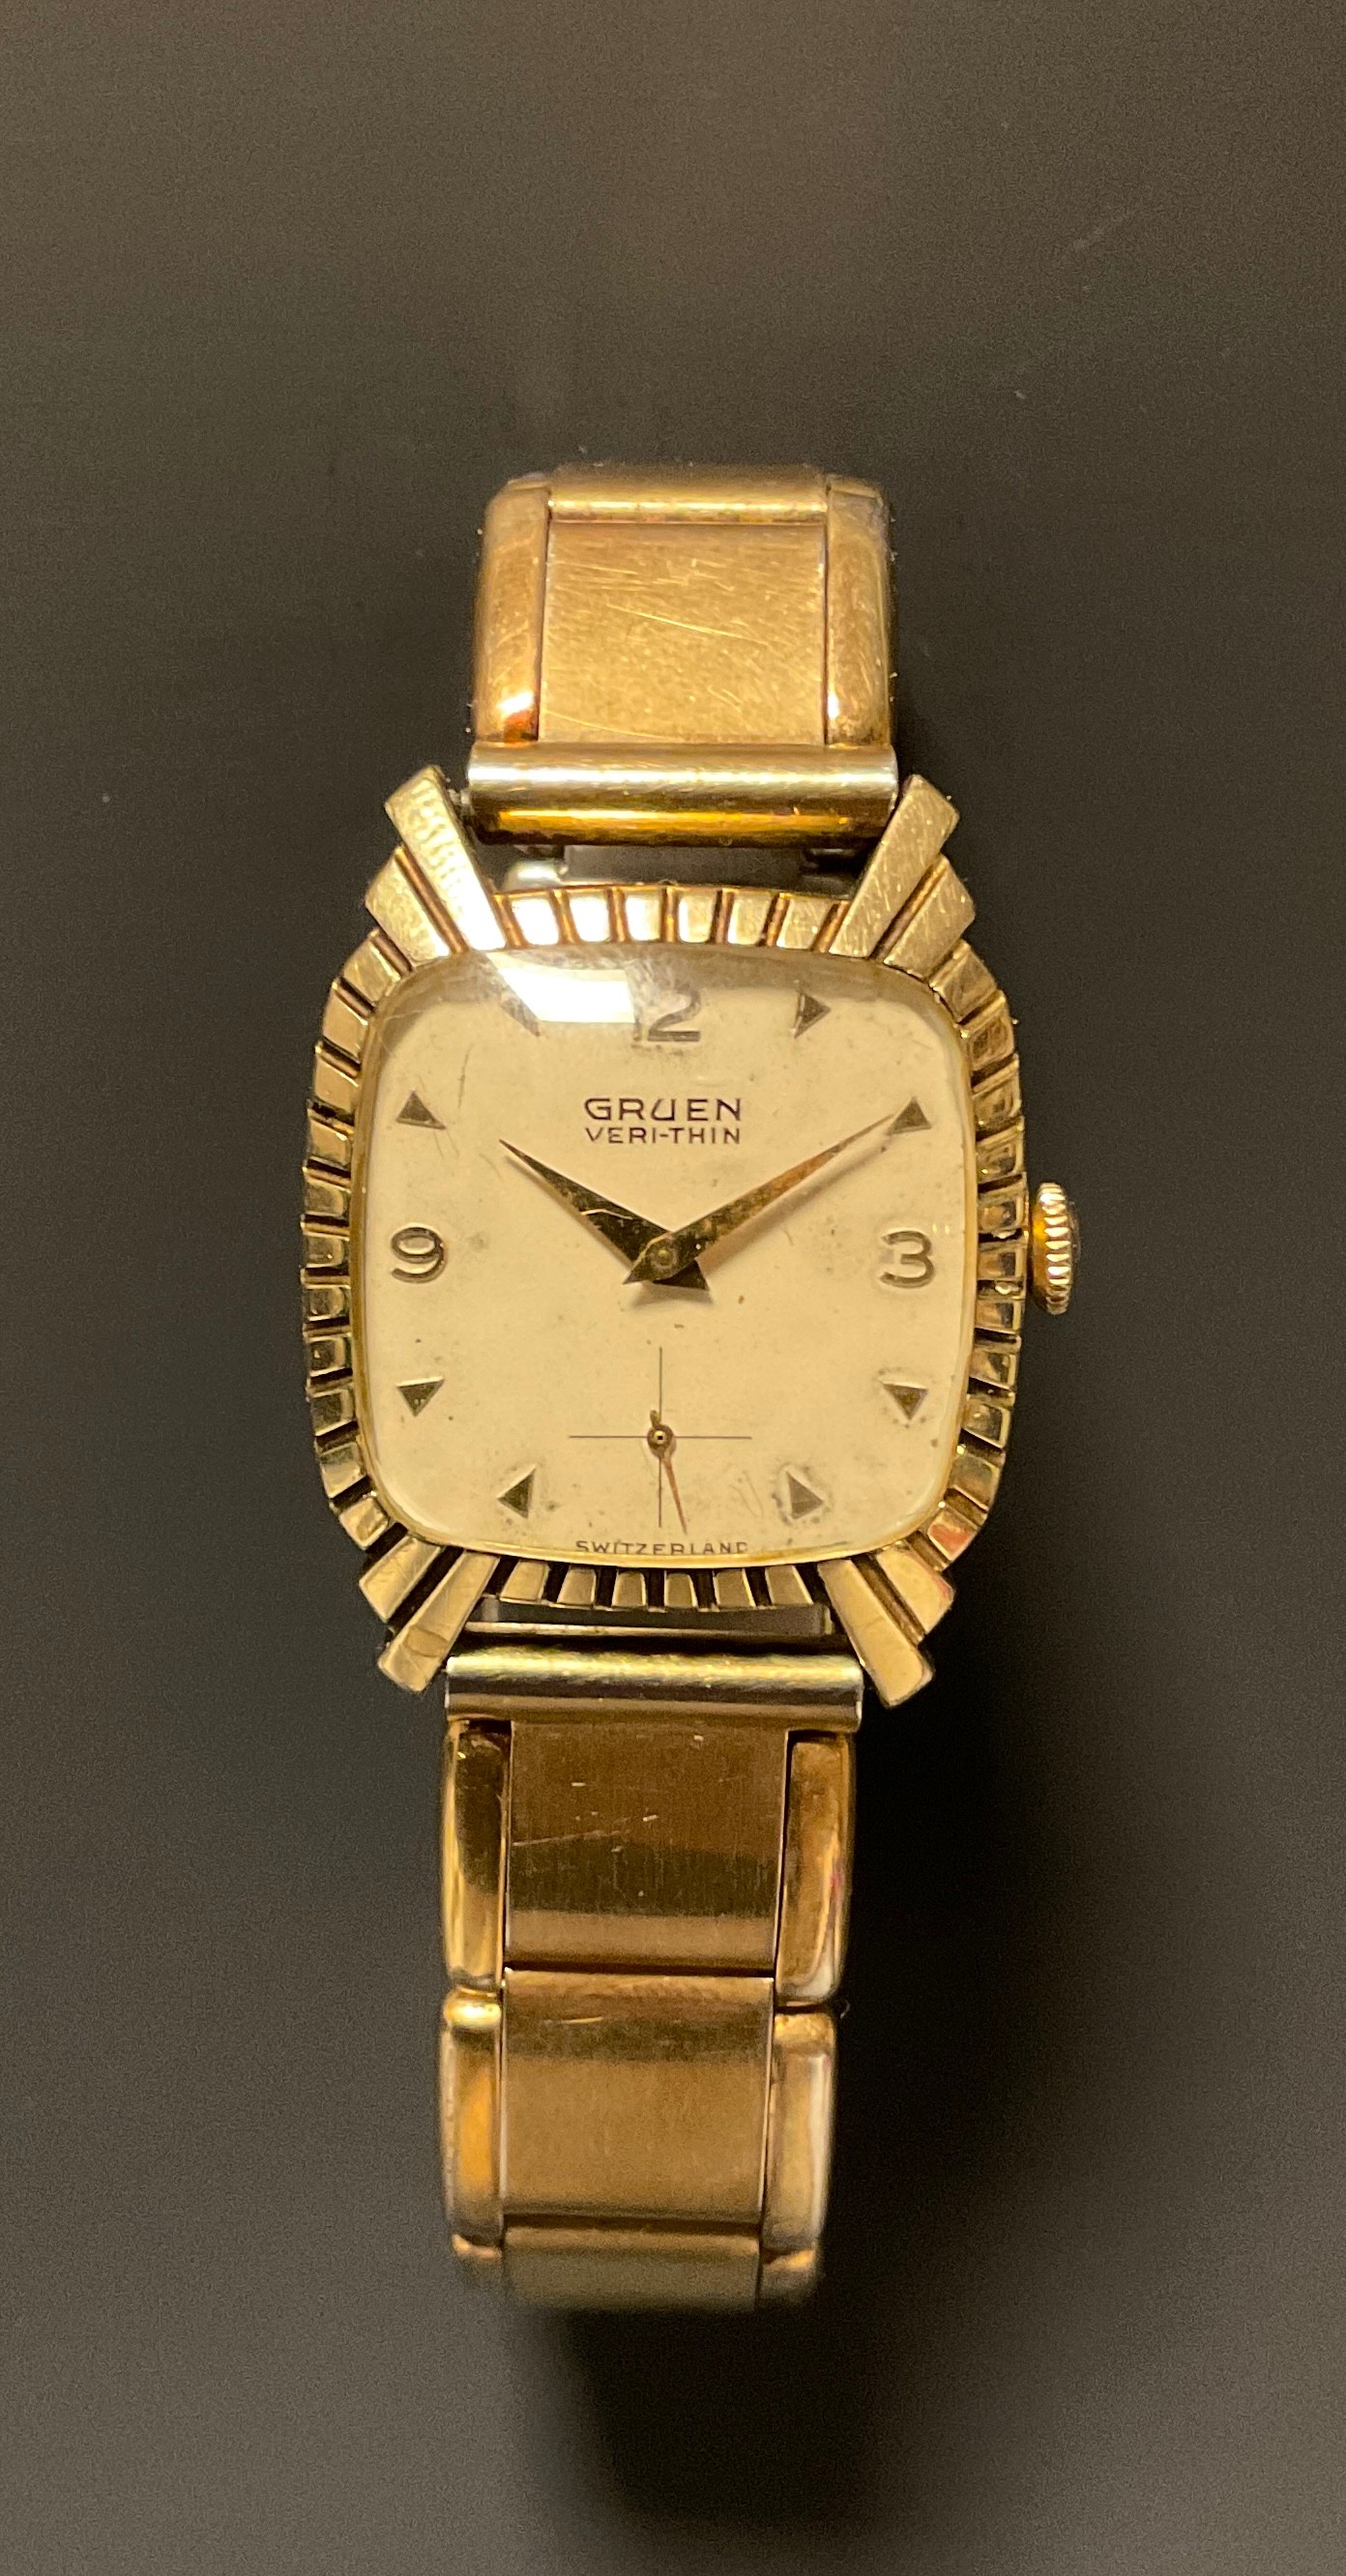 Gruen - Veri-Thin 1930s bracelet wristwatch, 26mm wide case, cream dial, Arabic numeral and